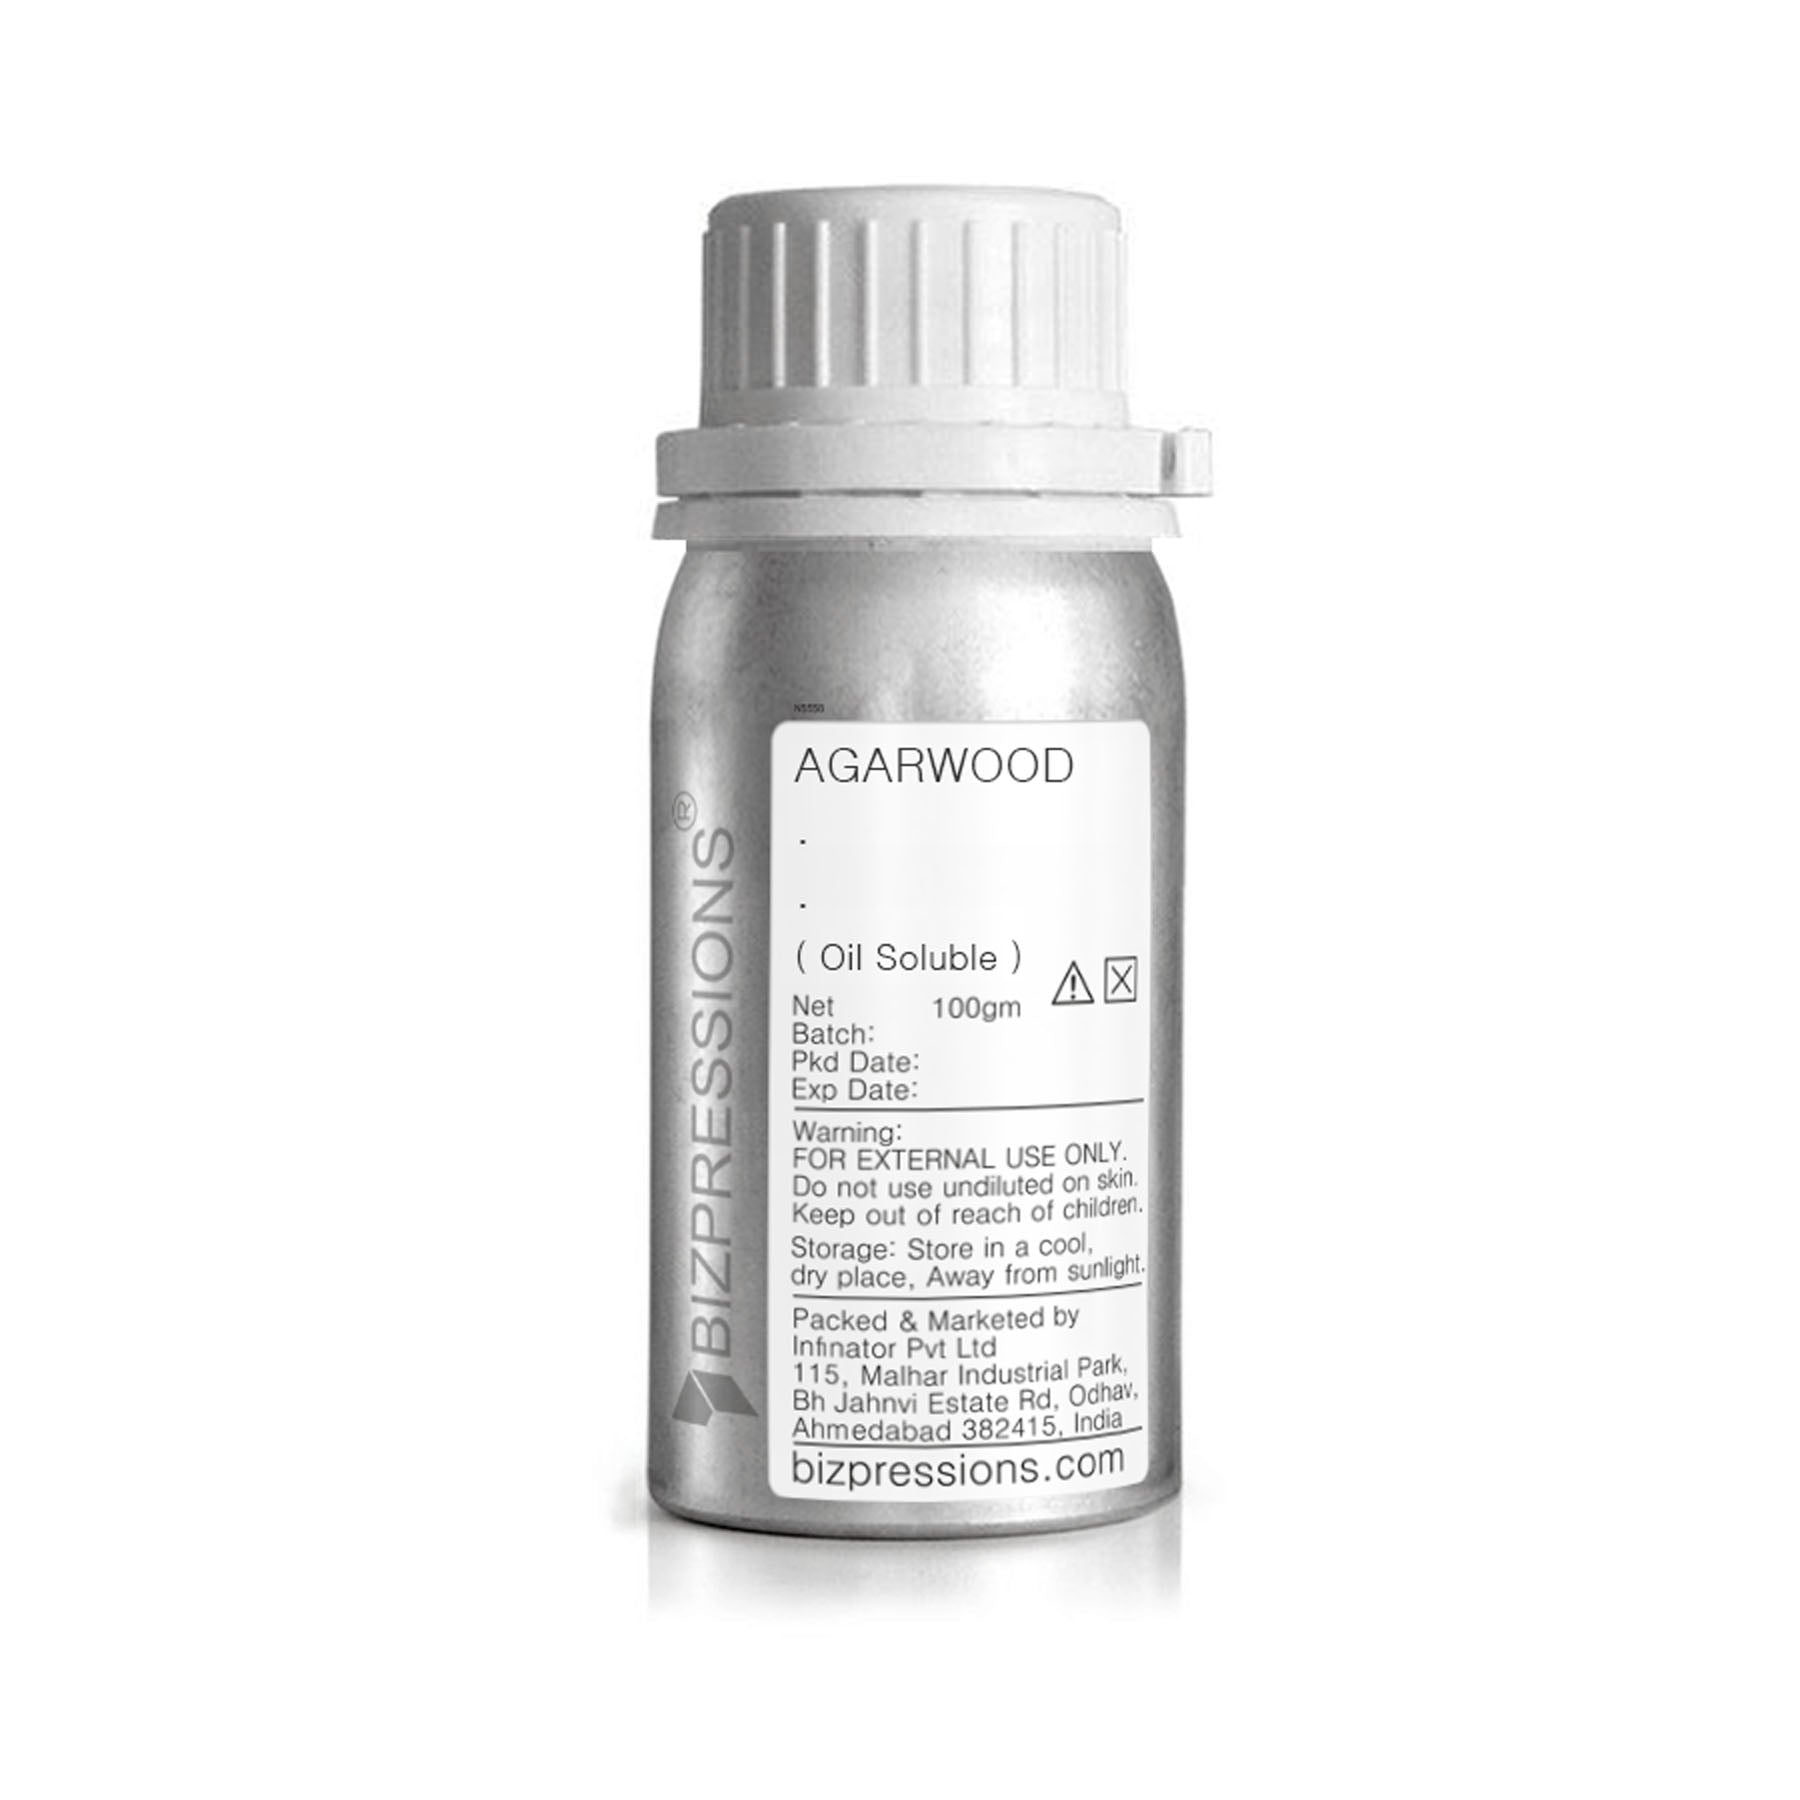 AGARWOOD - Fragrance ( Oil Soluble ) - 100 gm